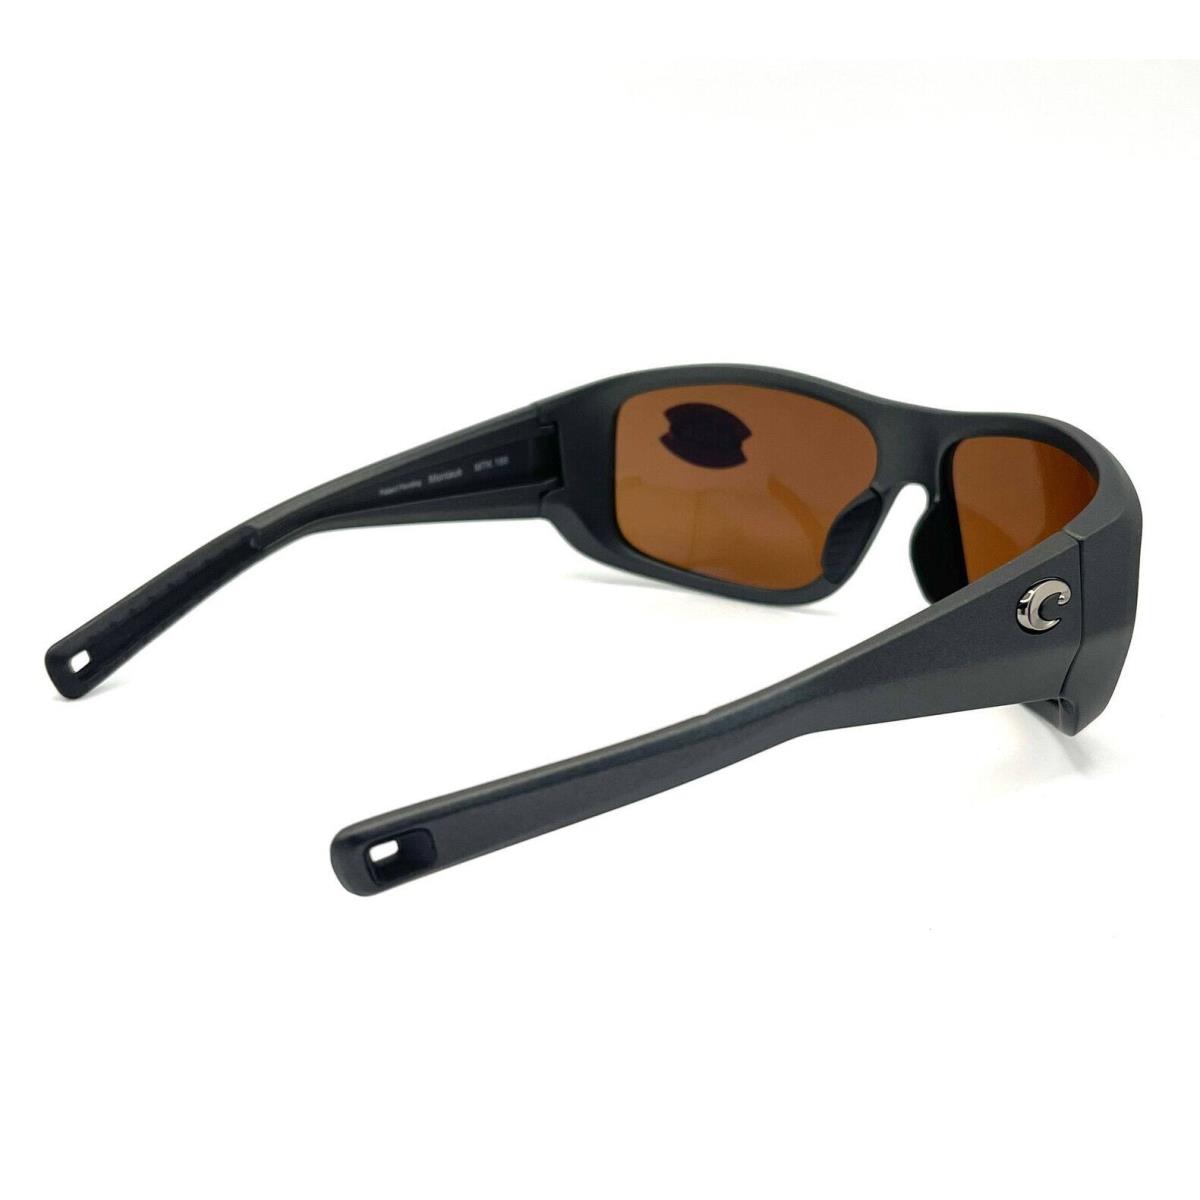 Costa Del Mar sunglasses Montauk - Frame: Steel Gray Metallic, Lens: 3